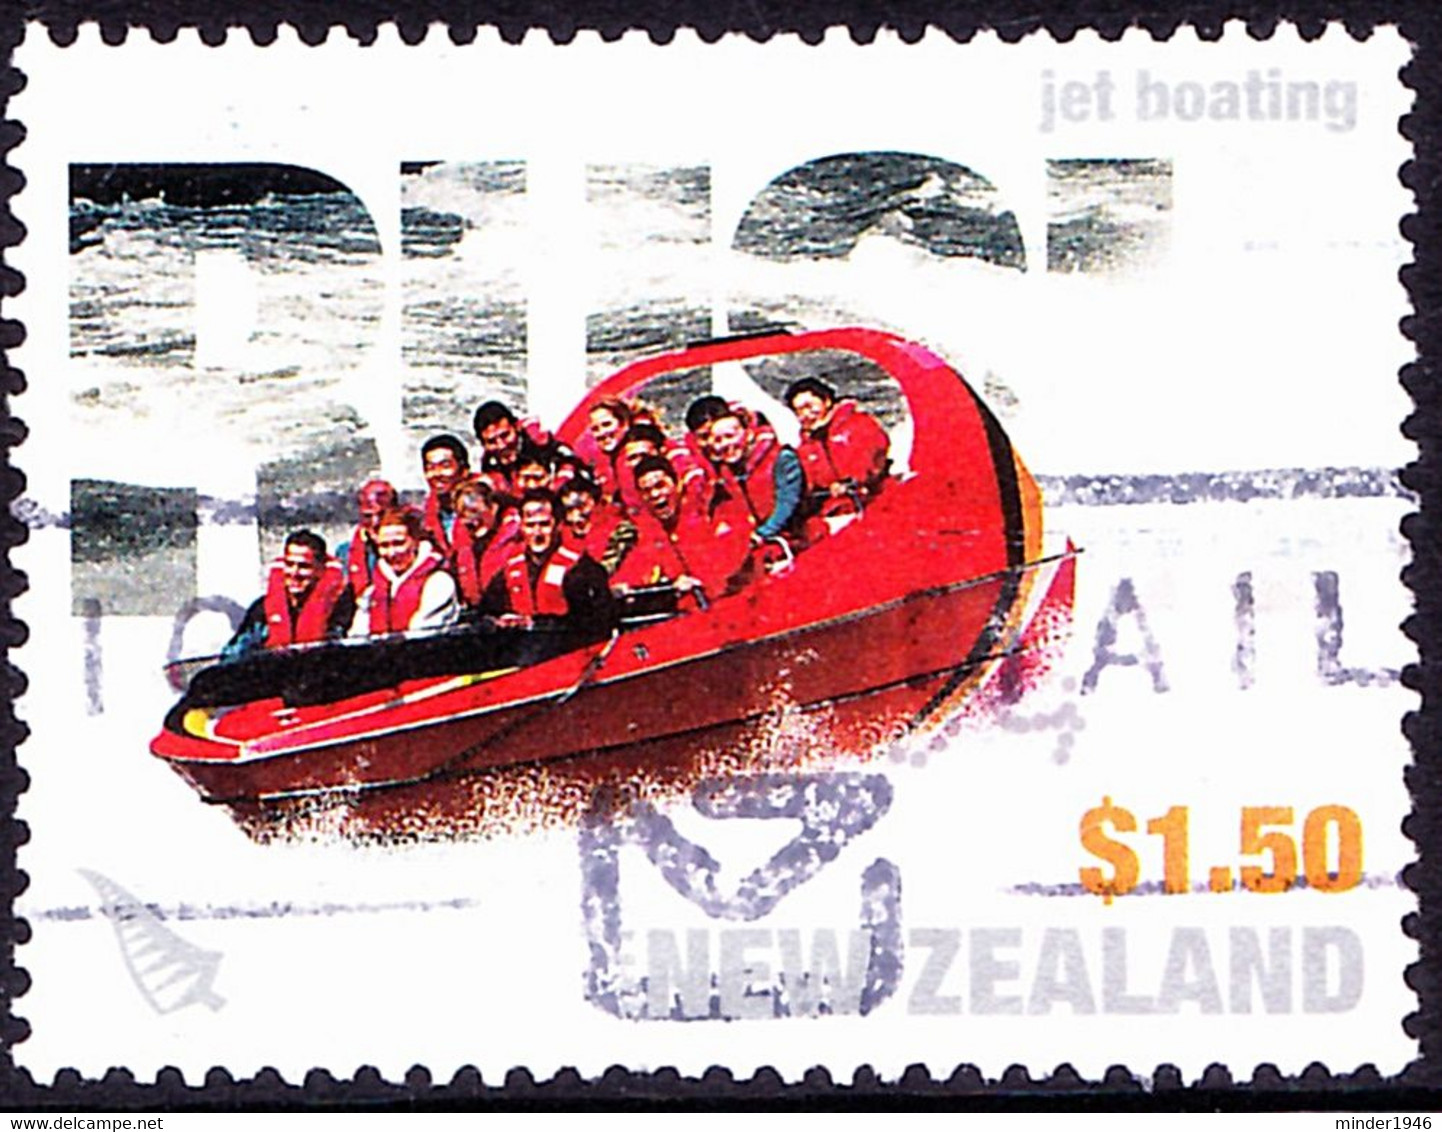 NEW ZEALAND 2004 $1.50 Multicoloured, Extreme Sport-Jet Boating SG2754 Used - Gebruikt